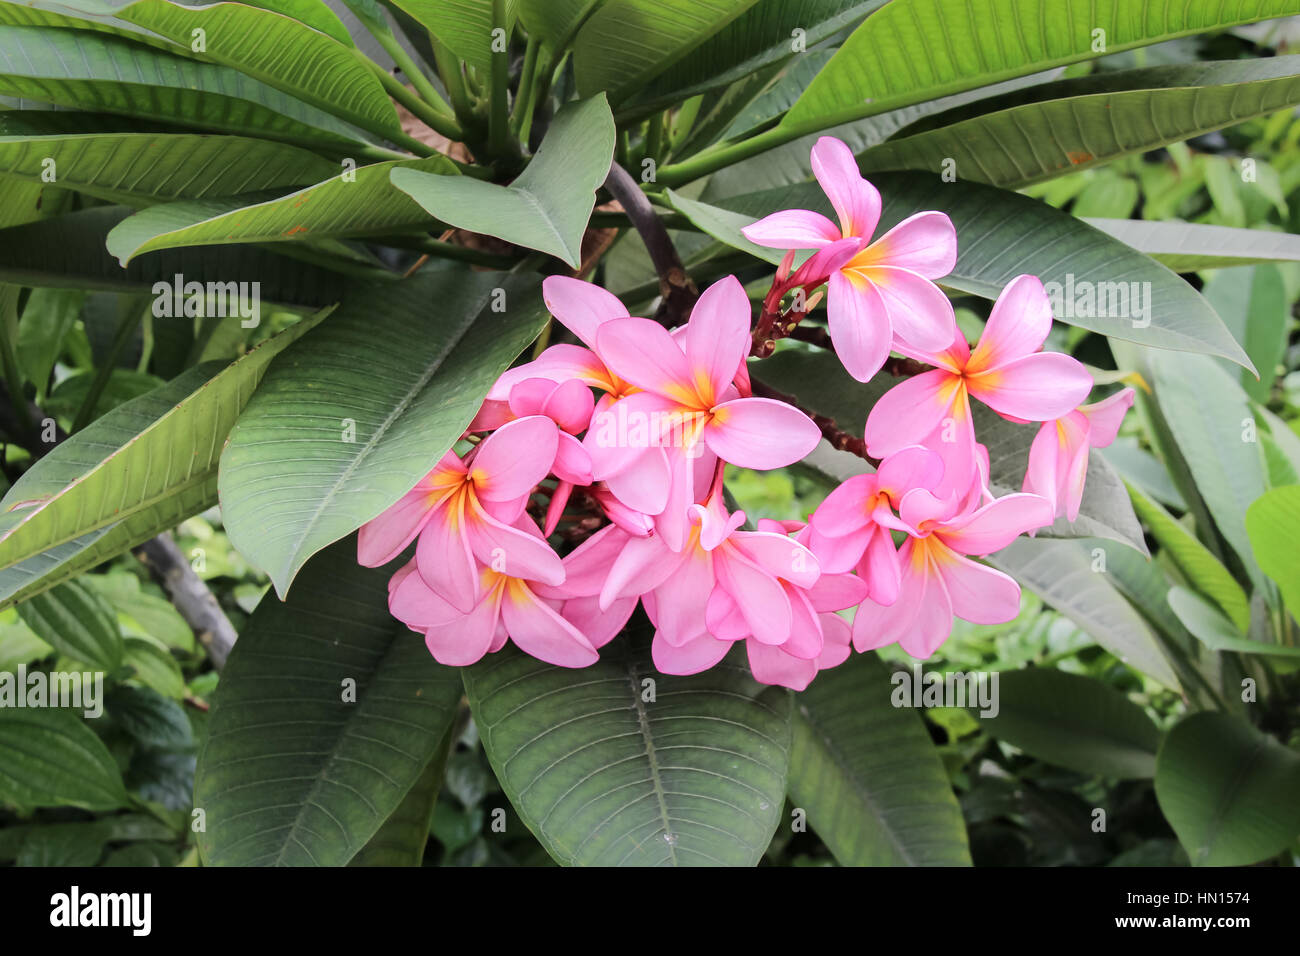 Arbusto de hermosas flores, Plumeria o Frangipani árbol en flor Foto de stock